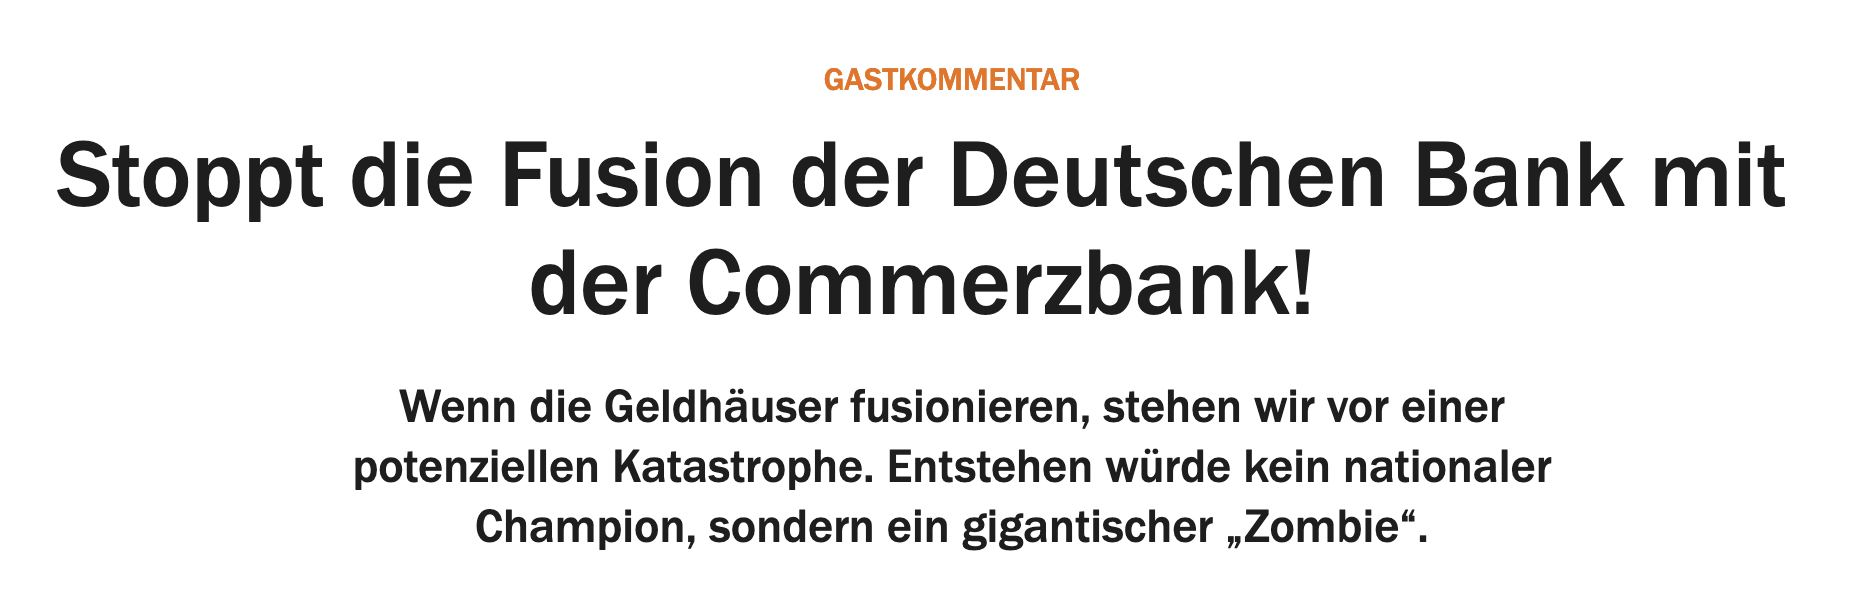 Why The Deutsche Bank Merger With Commerzbank Must Be Stopped Handelsblatt English German Yanis Varoufakis